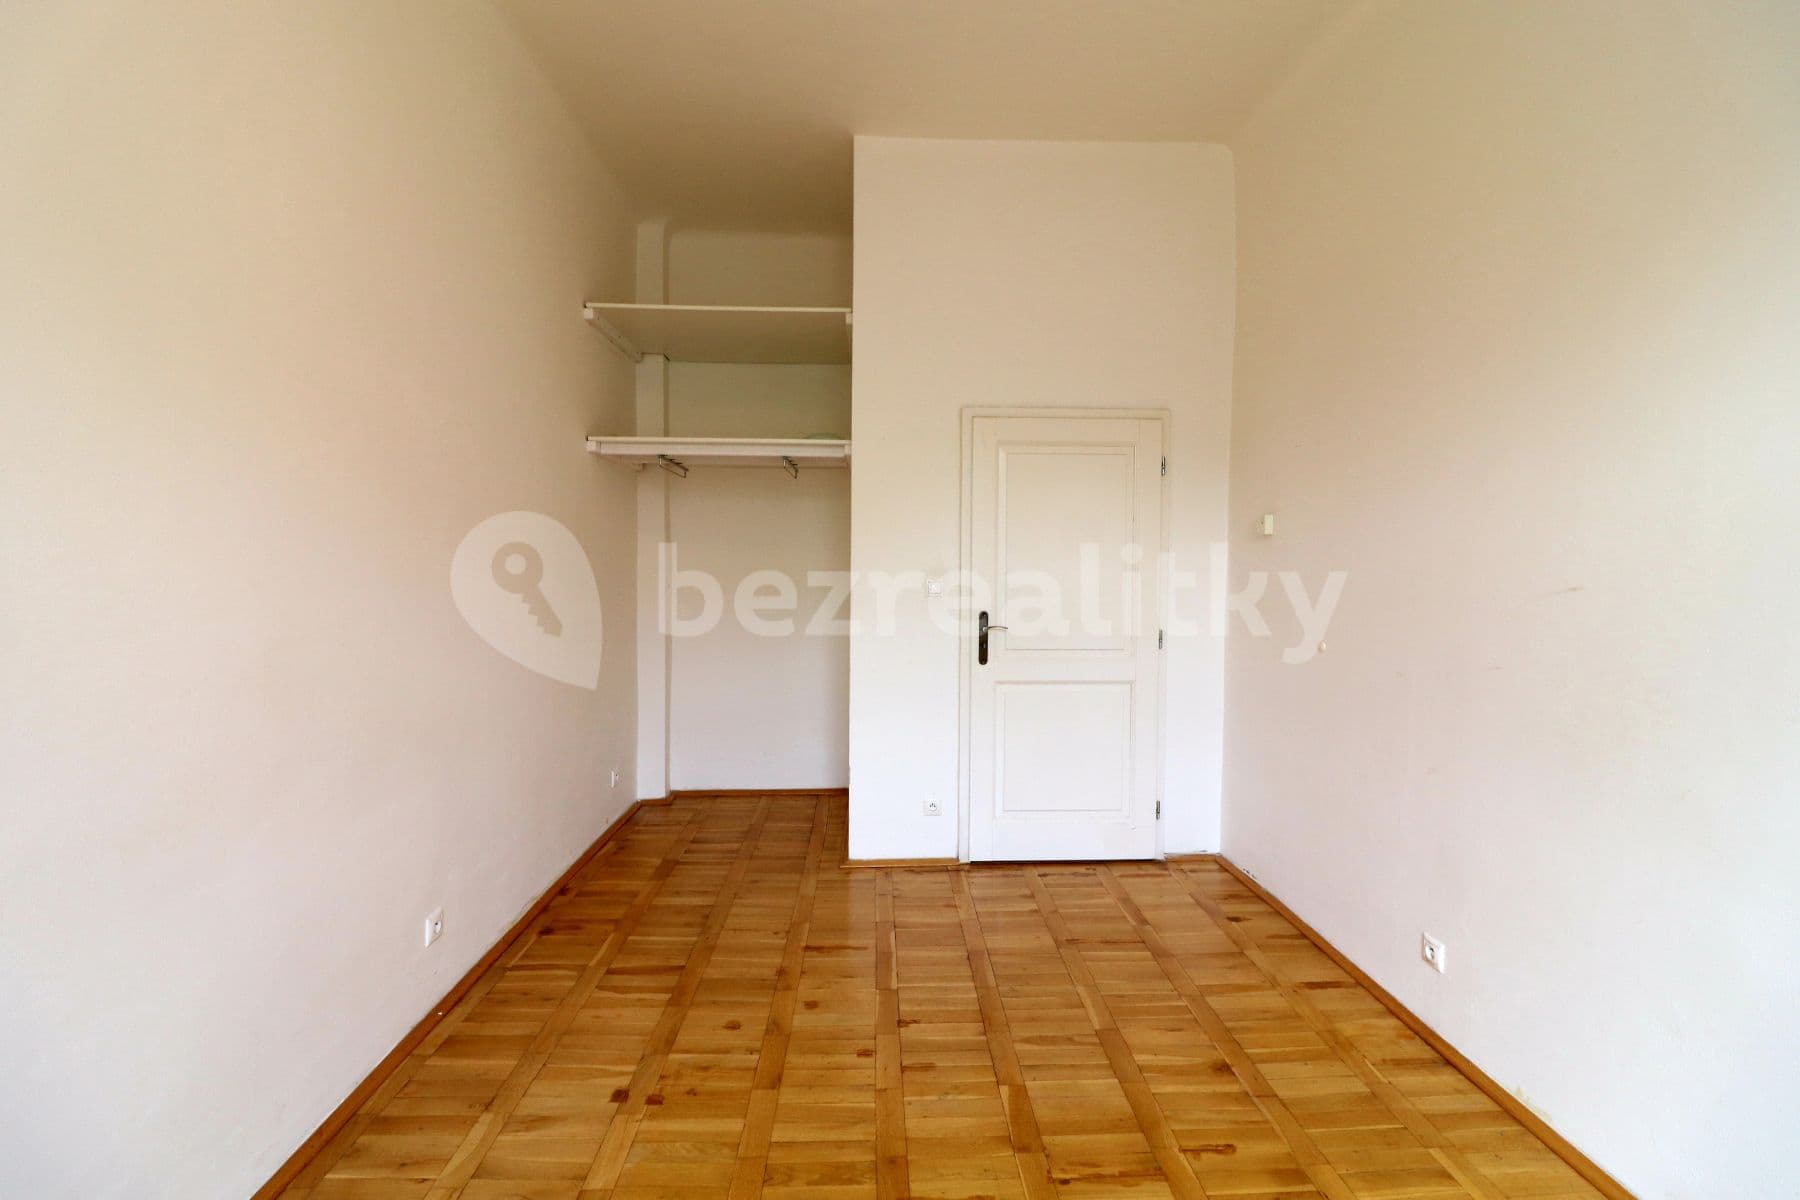 1 bedroom with open-plan kitchen flat for sale, 47 m², Ostrovského, Prague, Prague